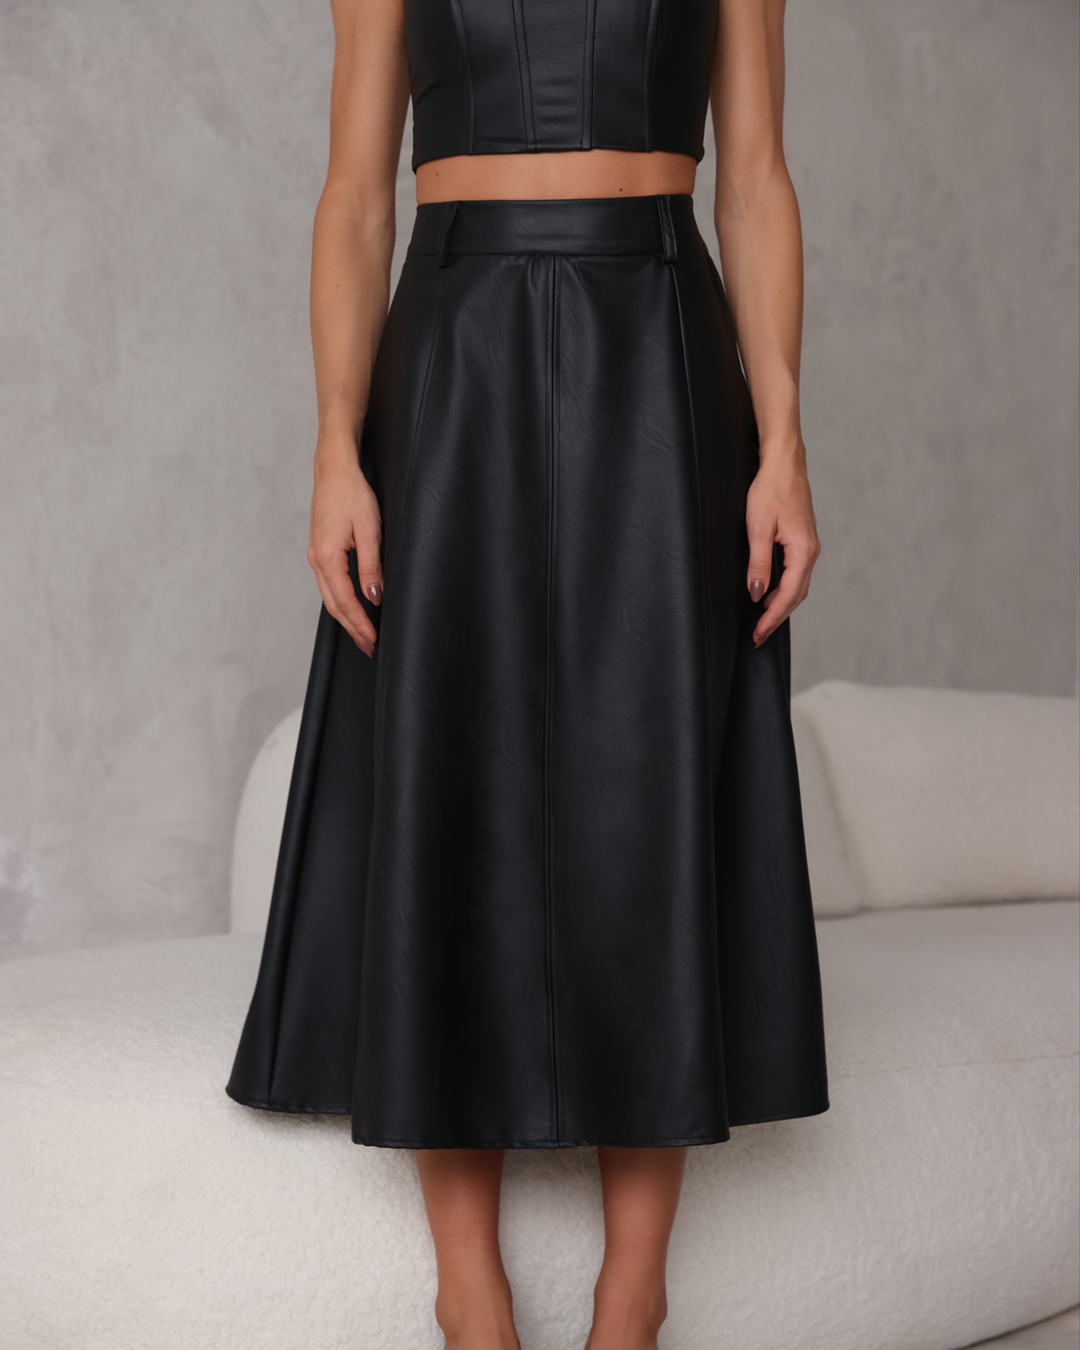 Dot Clothing - Set Dot Clothing Long Black Leather Skirt - 2303PRETO